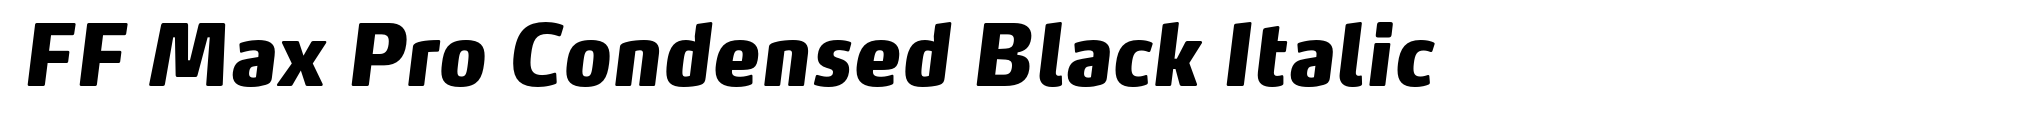 FF Max Pro Condensed Black Italic image